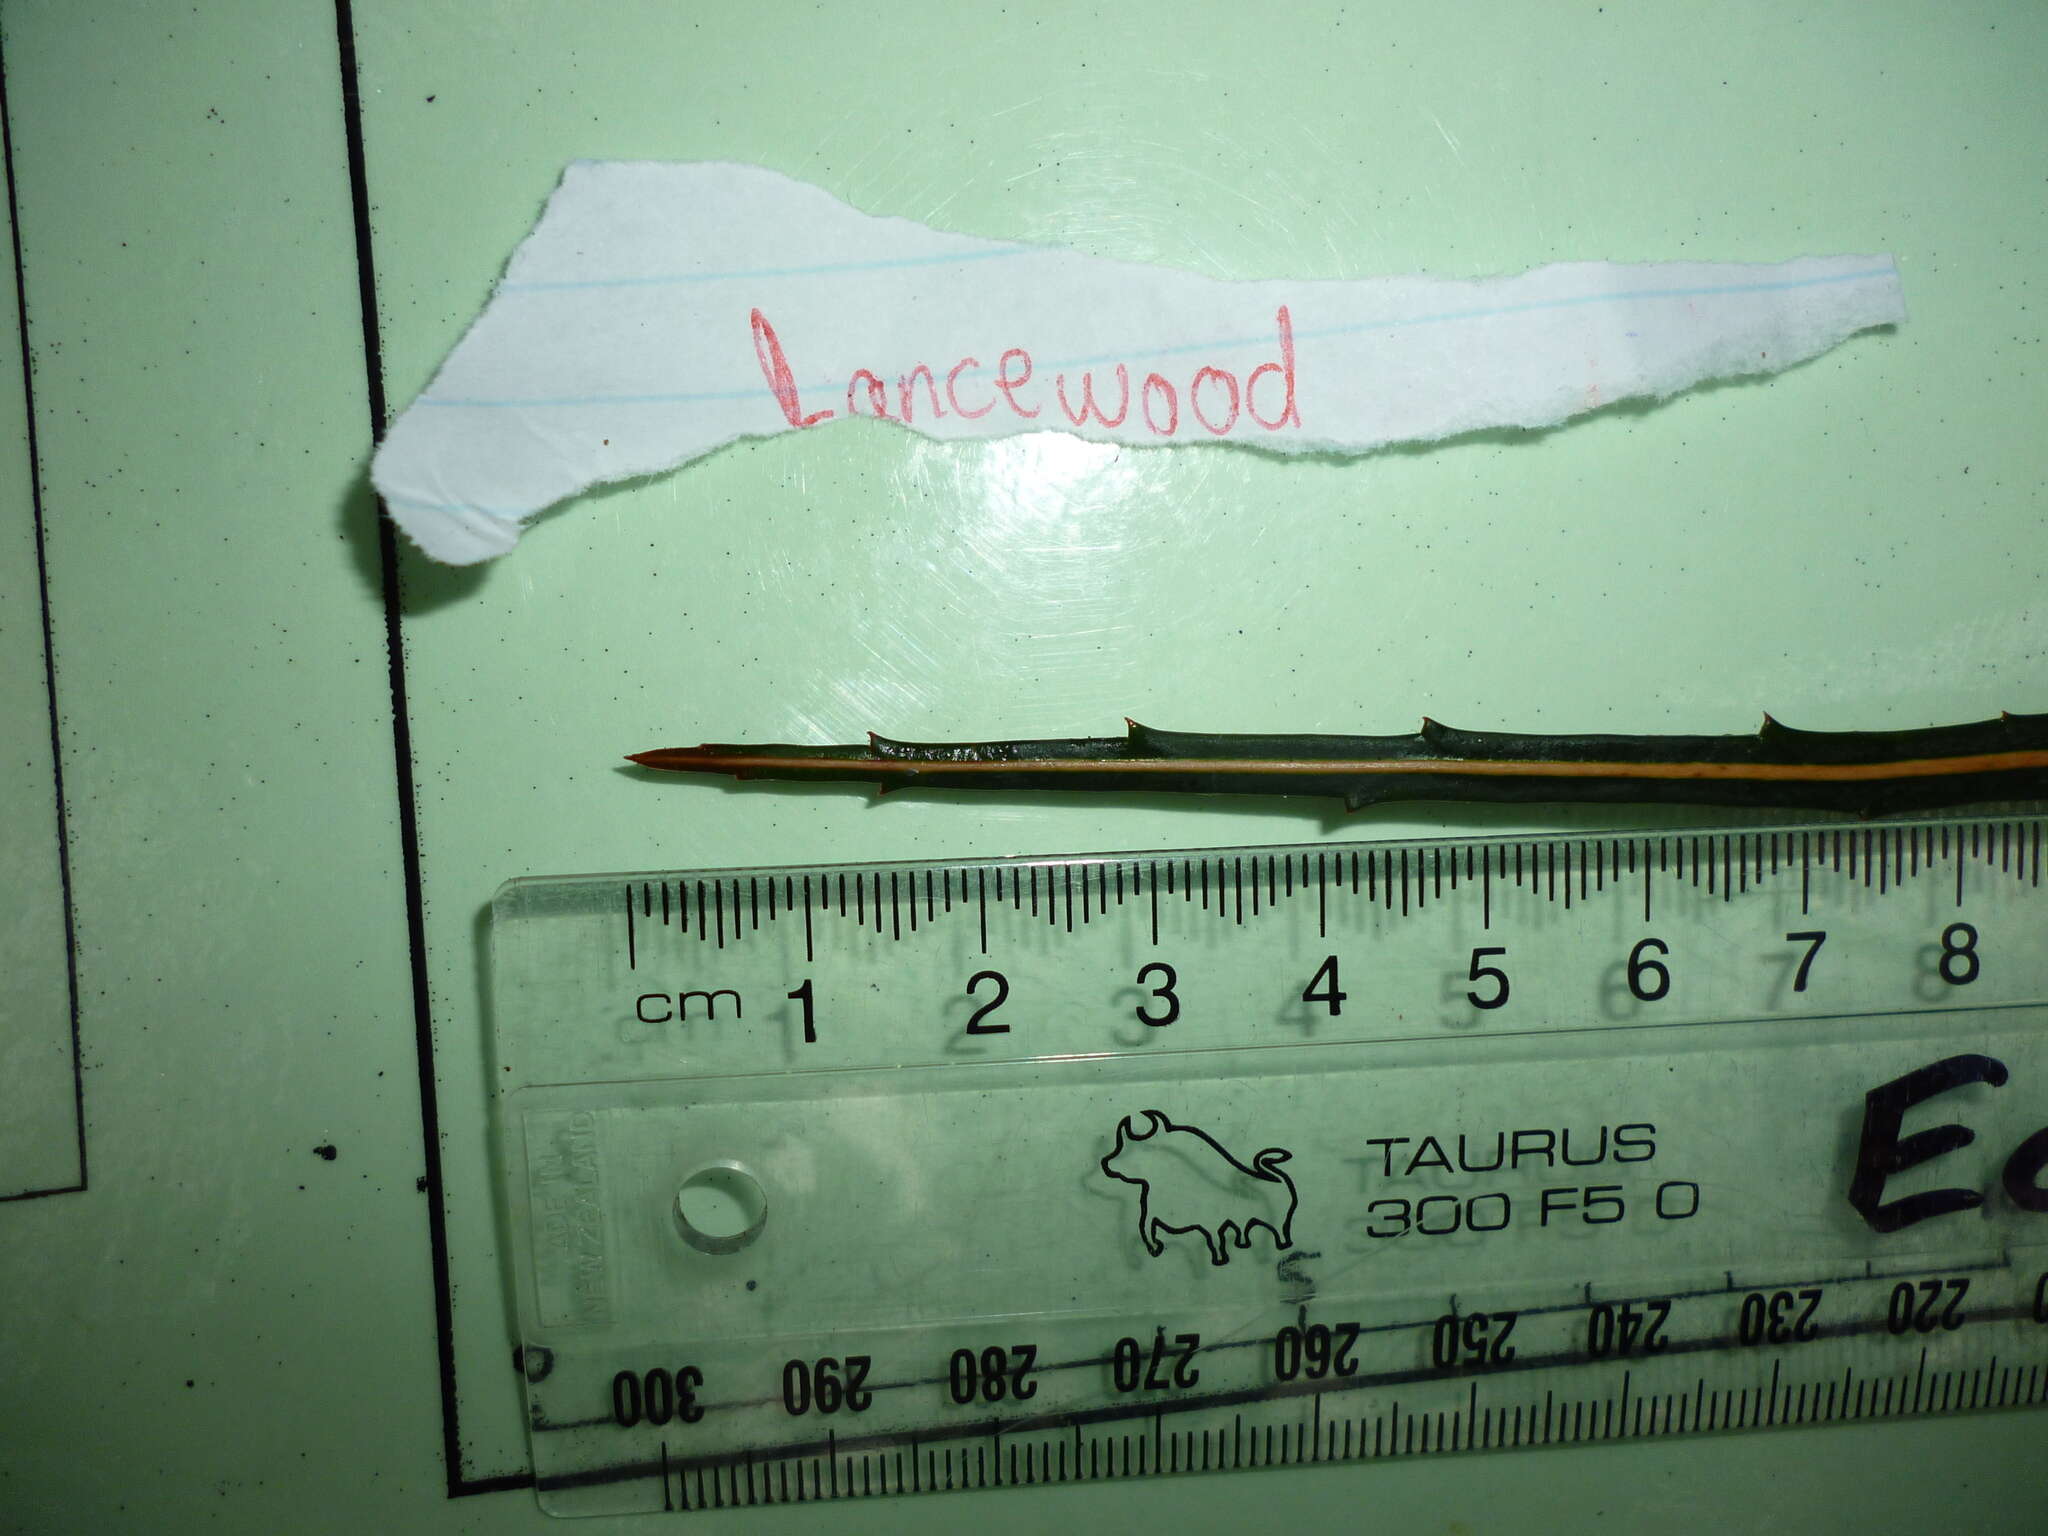 Image of lancewood